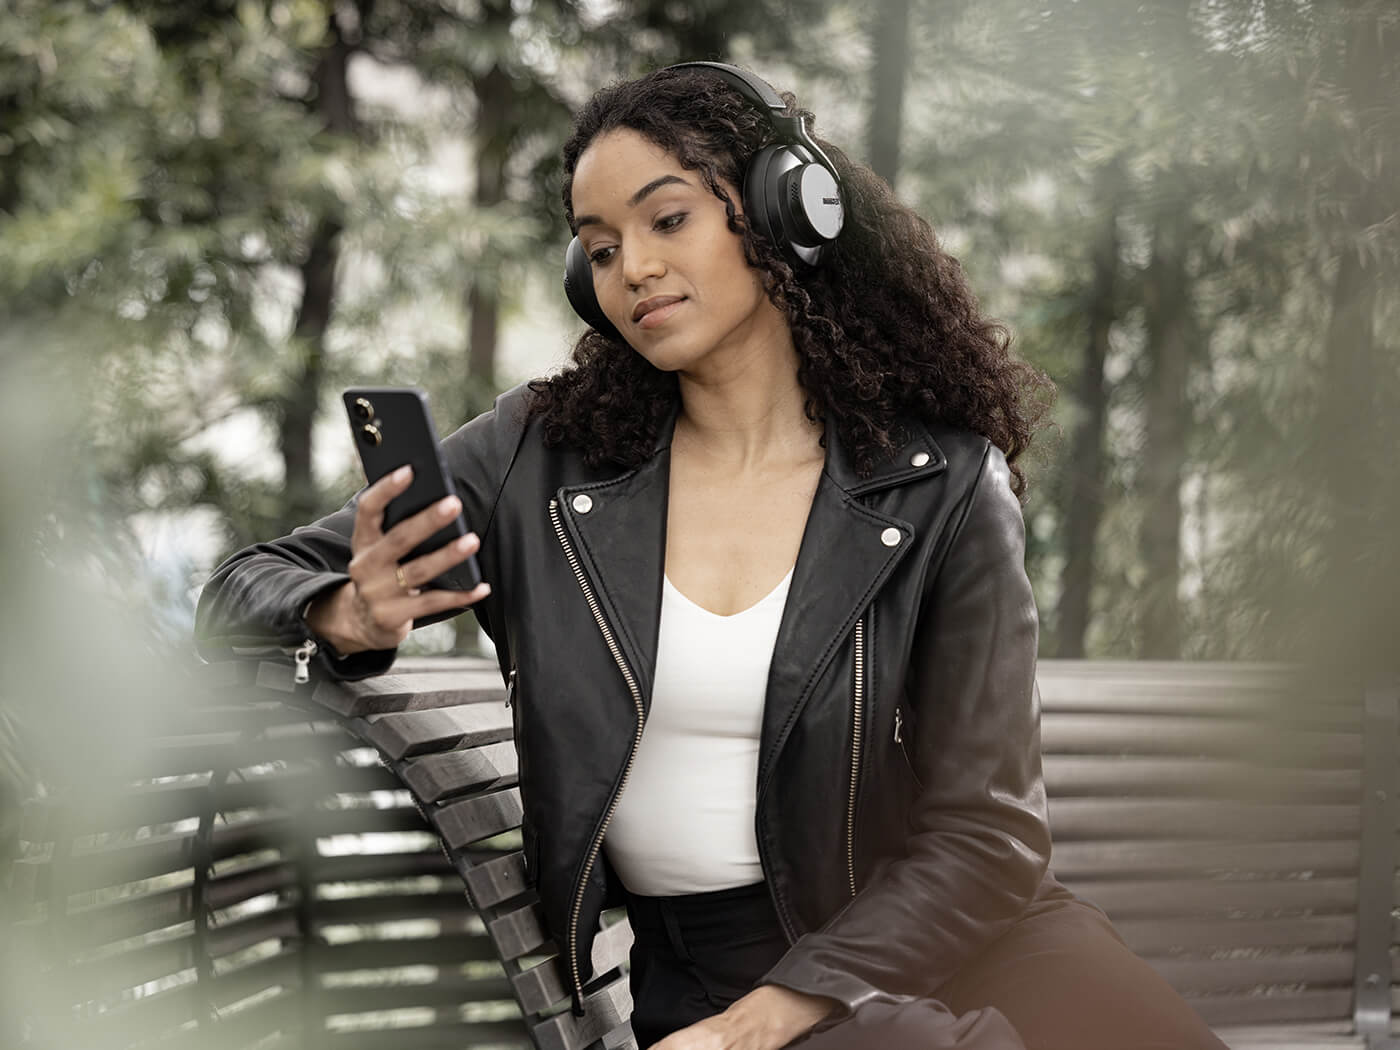 Shure AONIC 50 Gen 2 headphones in use outdoors